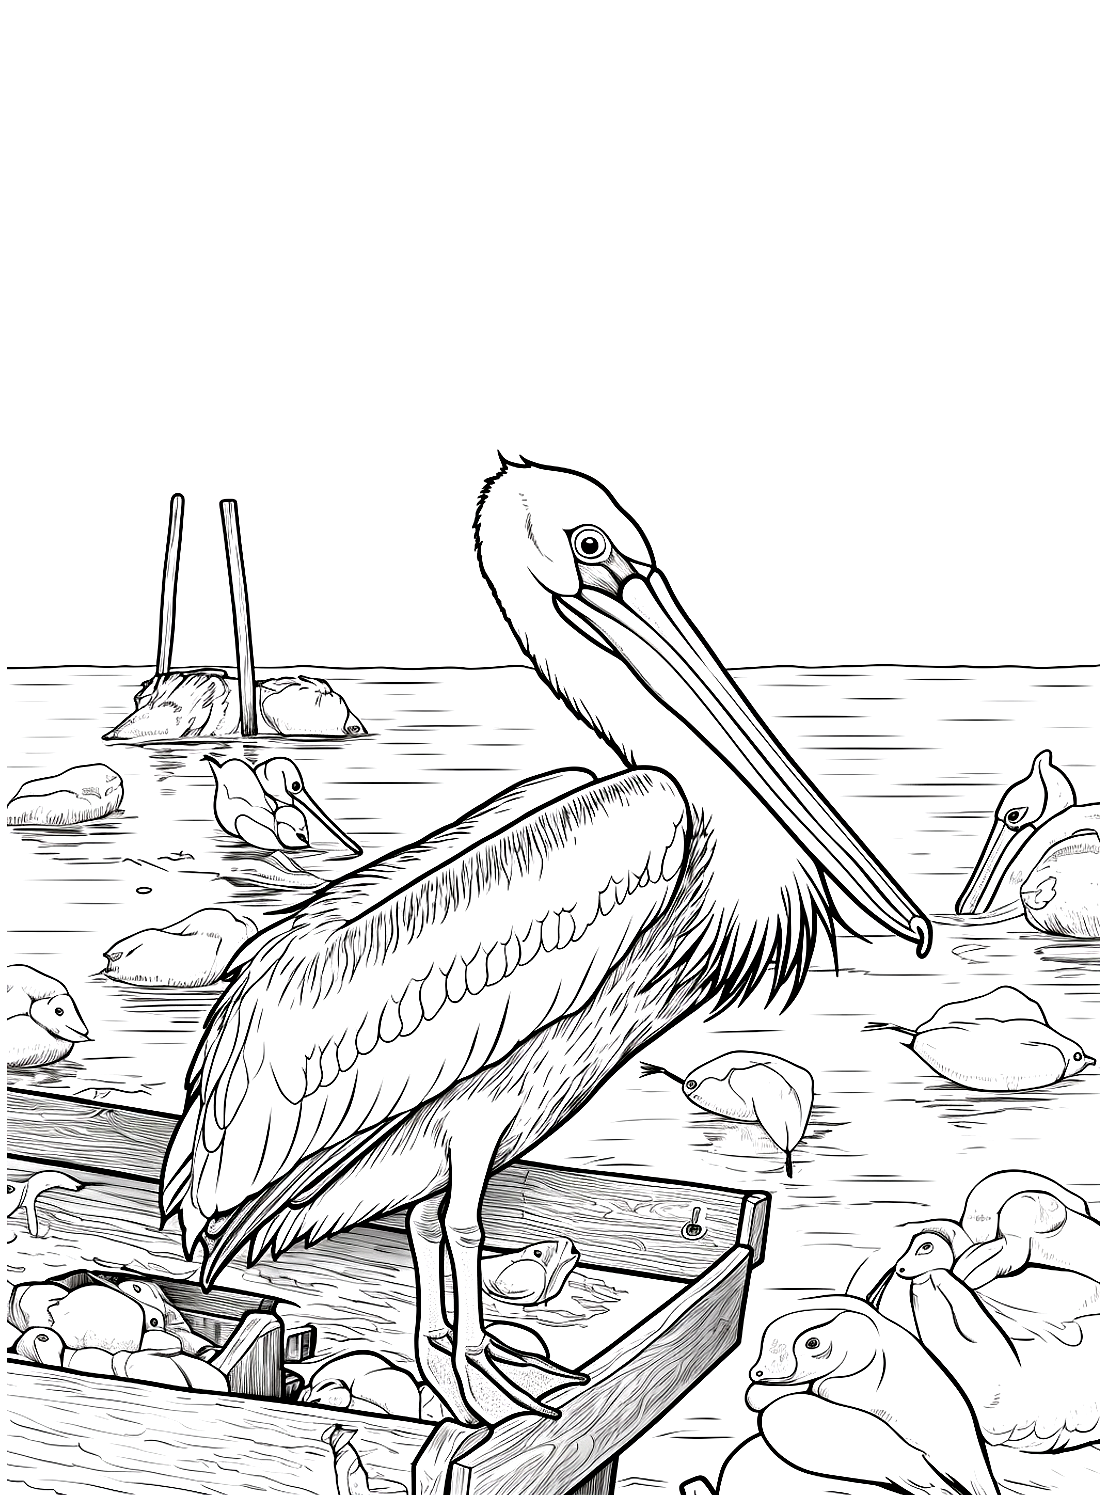 Pelikane am Strand von Pelican